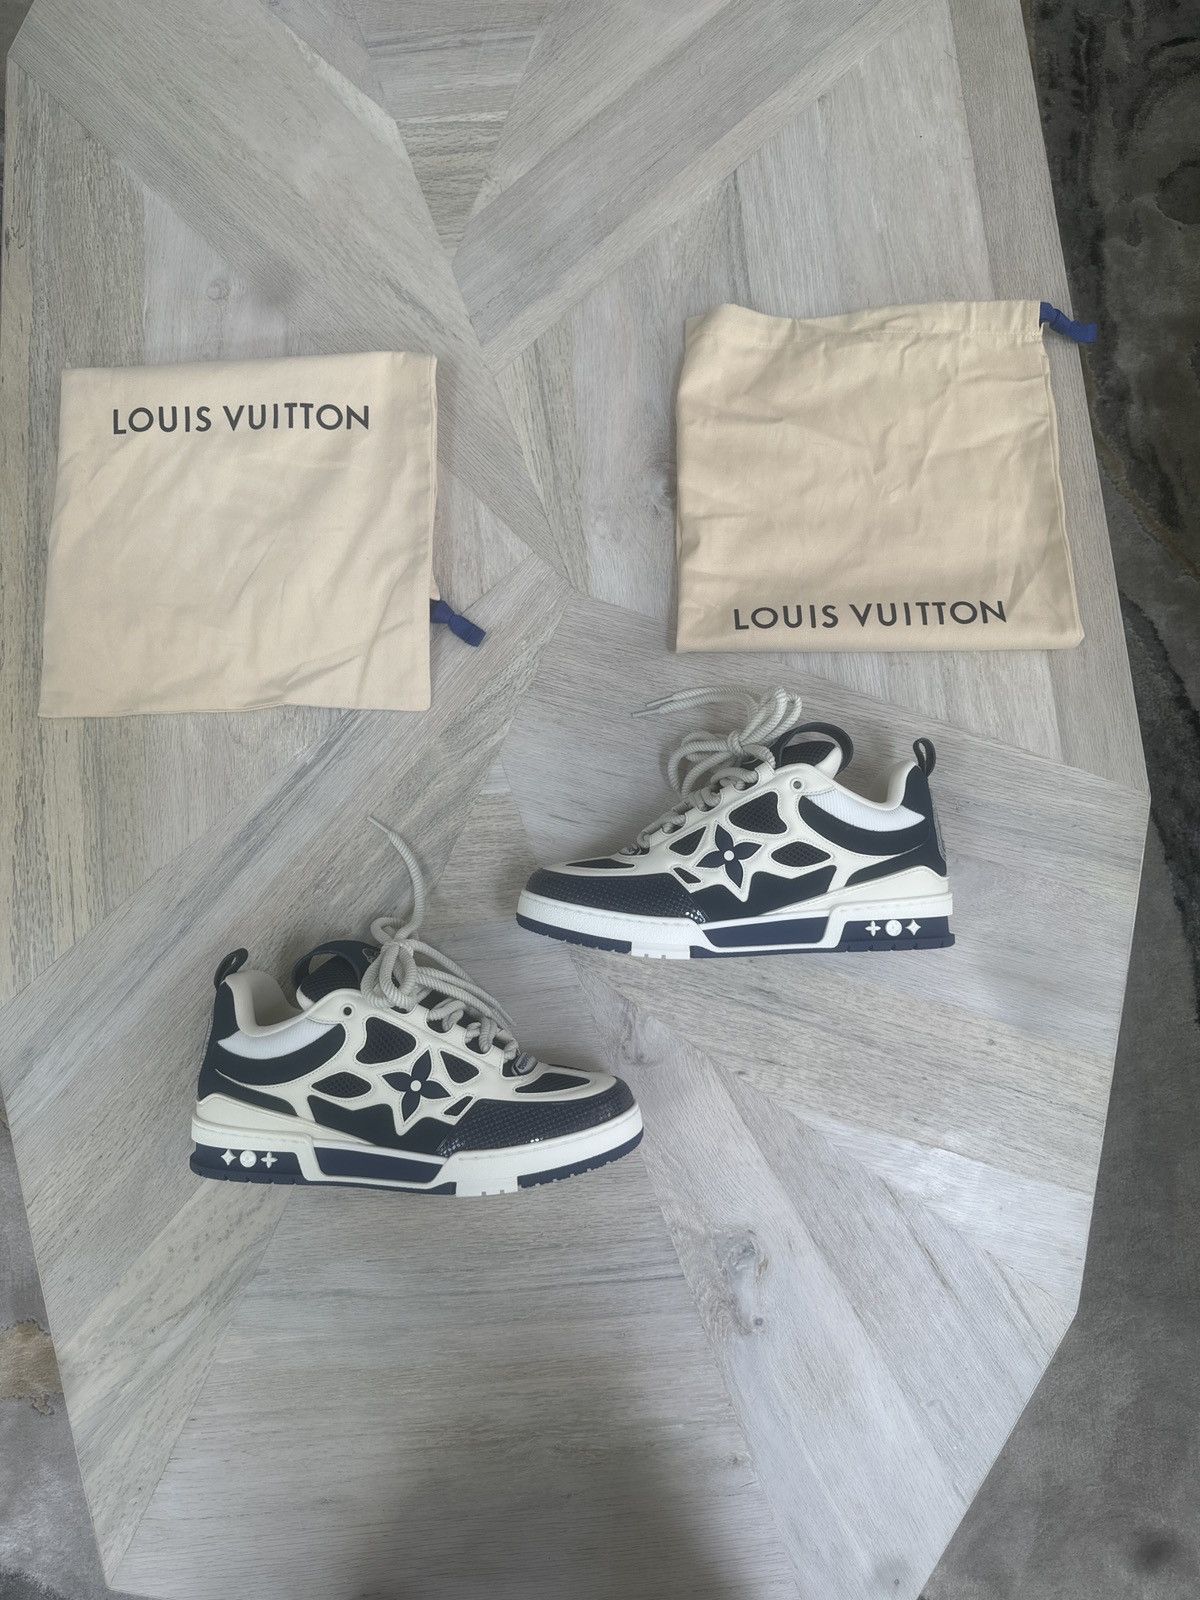 Louis Vuitton Fastlane Shoes Size 10.5 US (Size 9 But Lv Runs Big